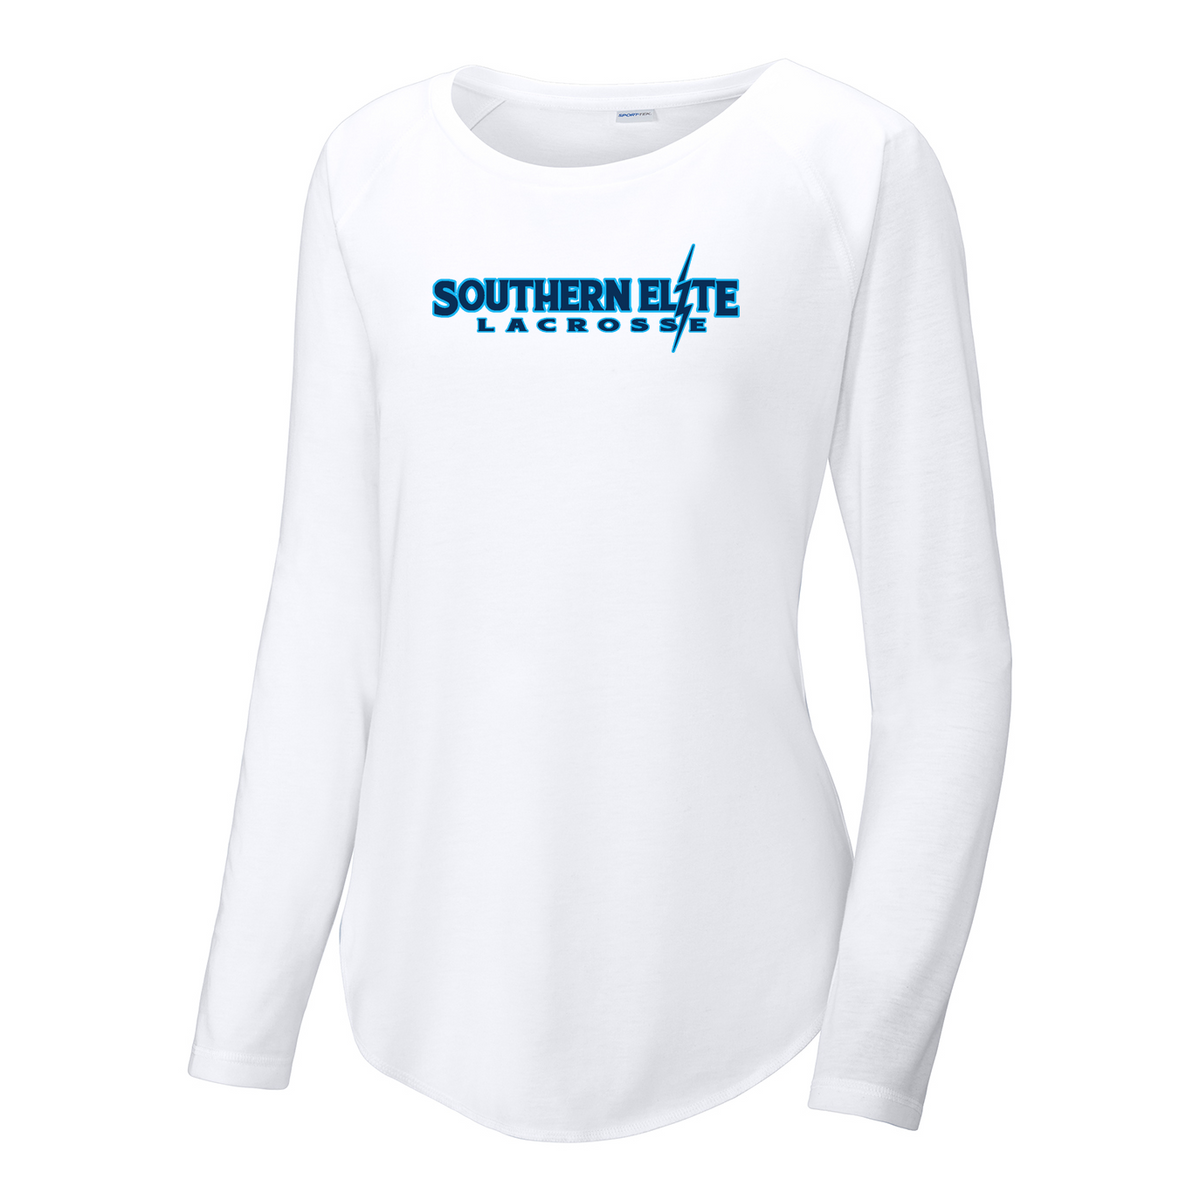 Southern Elite Lacrosse Women's Raglan Long Sleeve CottonTouch